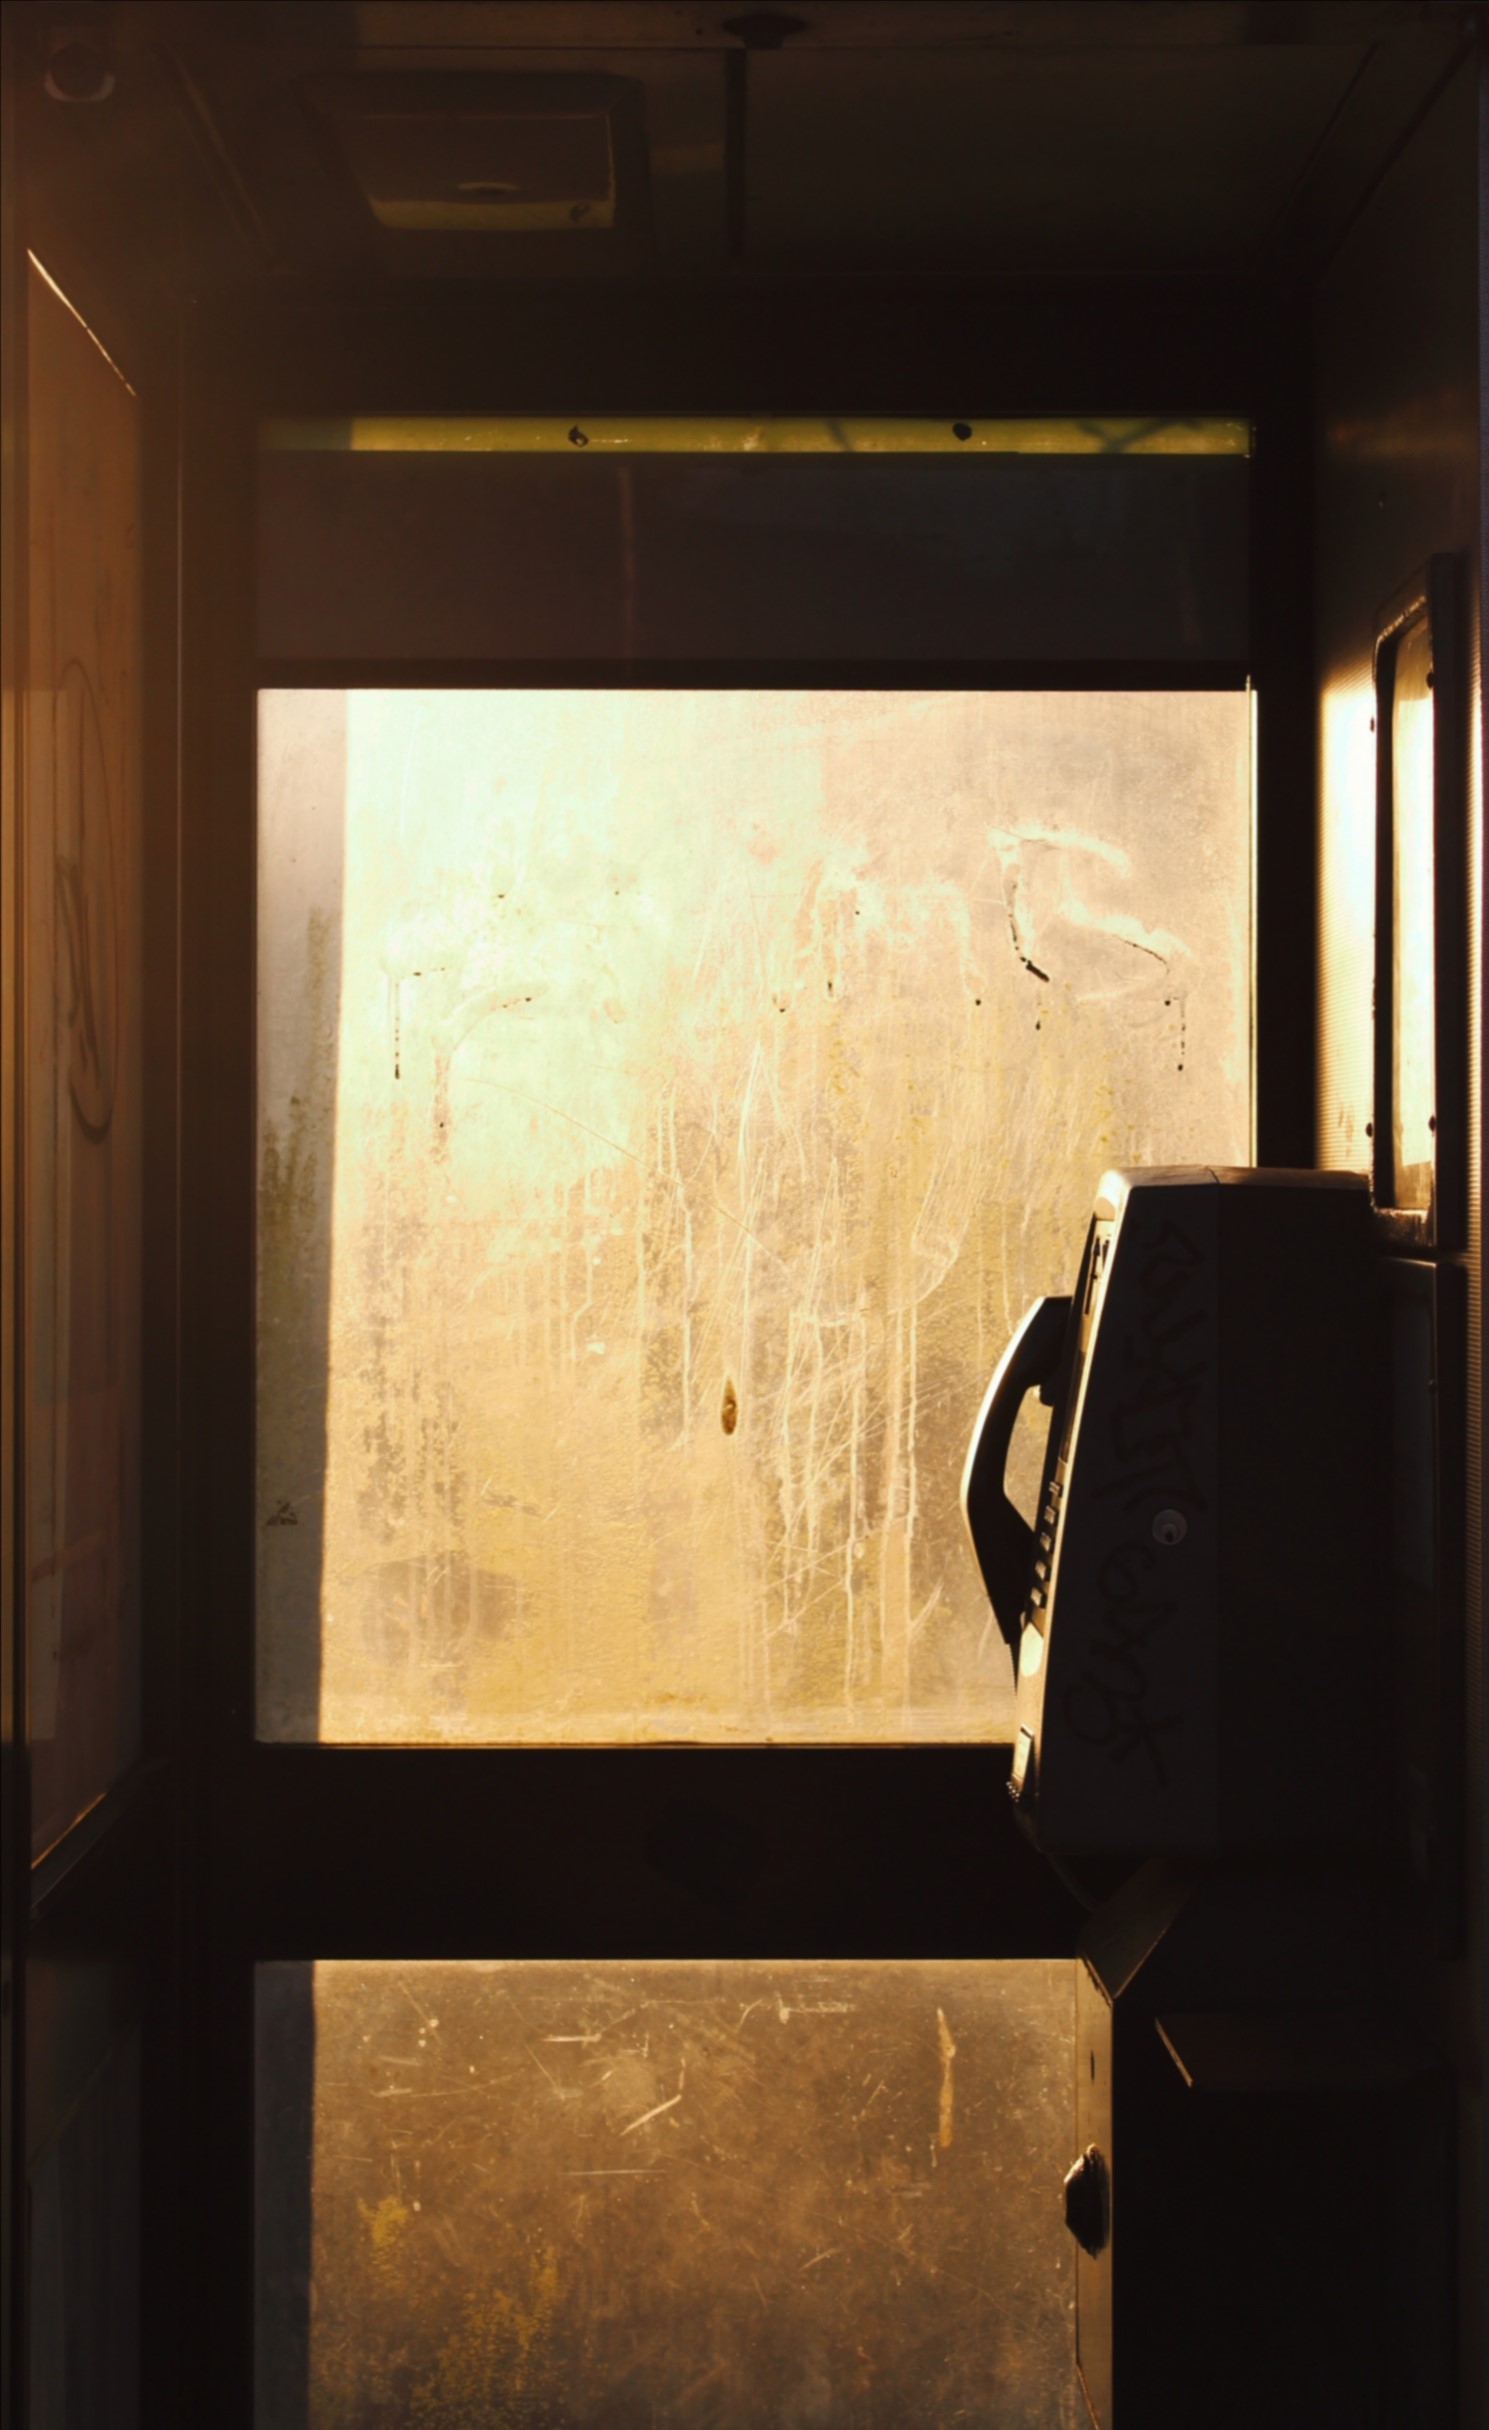 Katherine's image shows phonebox with dusky Autumn light shining through 